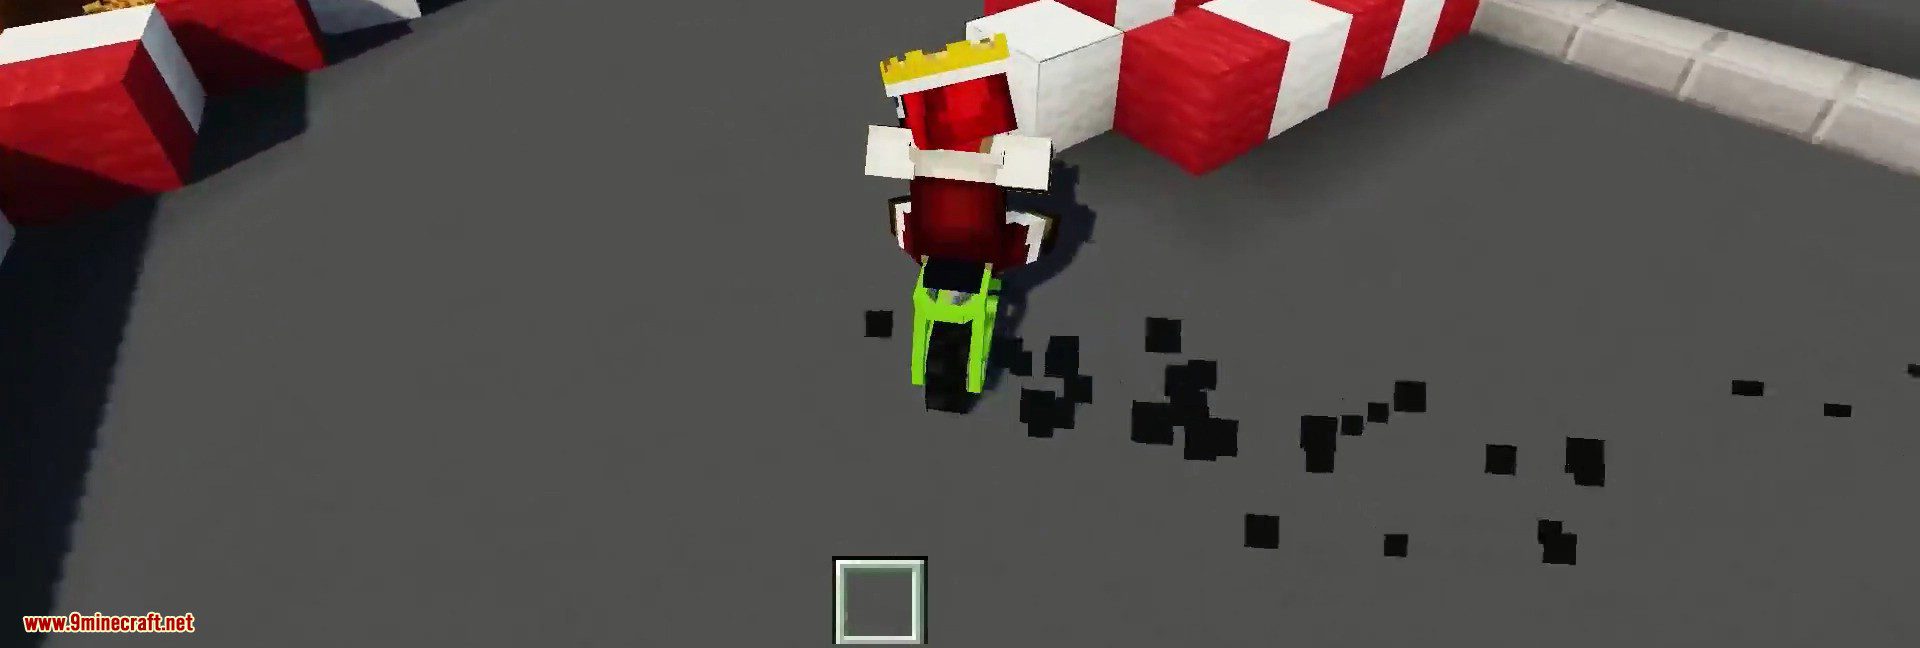 MrCrayfish’s Vehicle Mod Screenshots 7